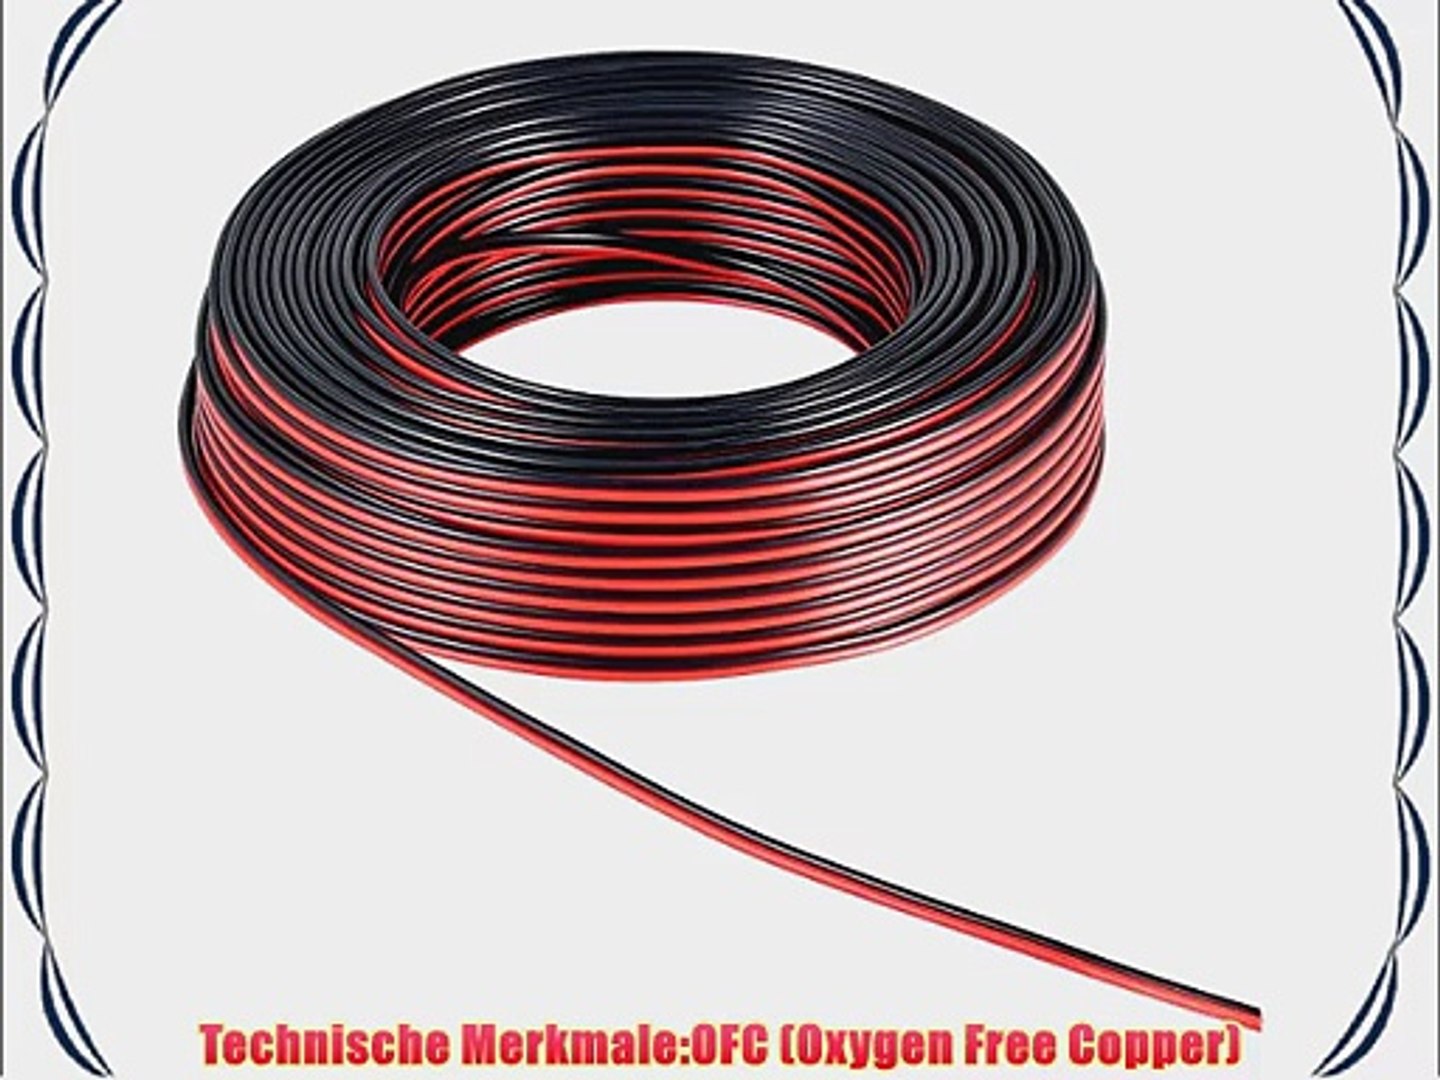 Lautsprecherkabel rot//schwarz CCA Querschnitt 2 x 2,5 mm² goobay 100 m Spule